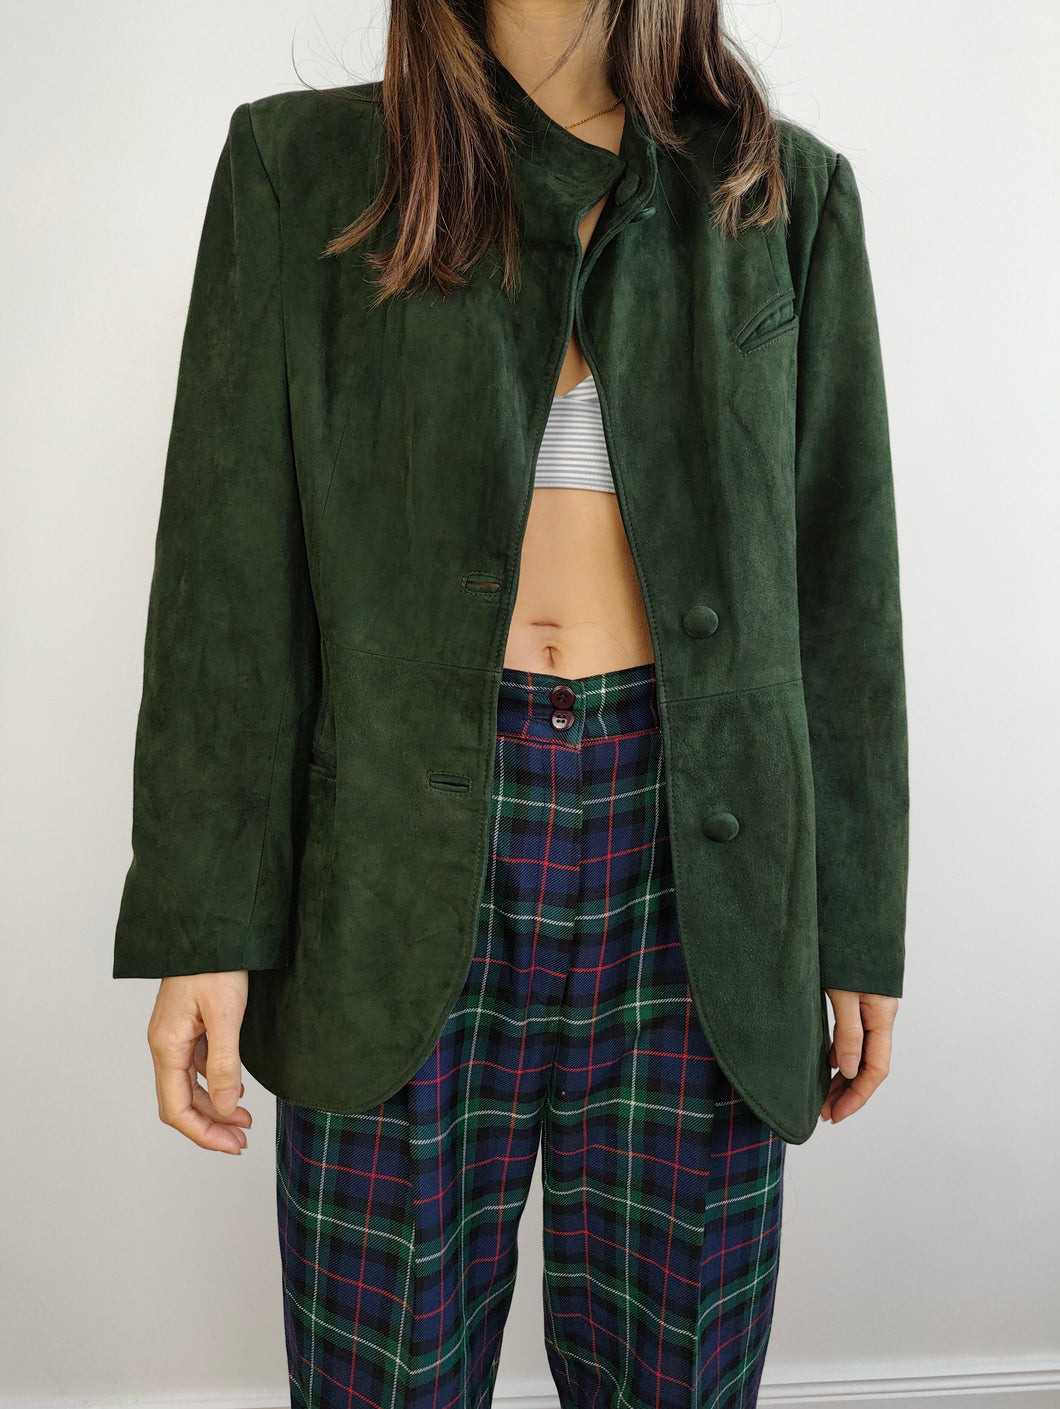 The Green Suede Leather Blazer Jacket | Vintage real suede leather jacket fitted women S